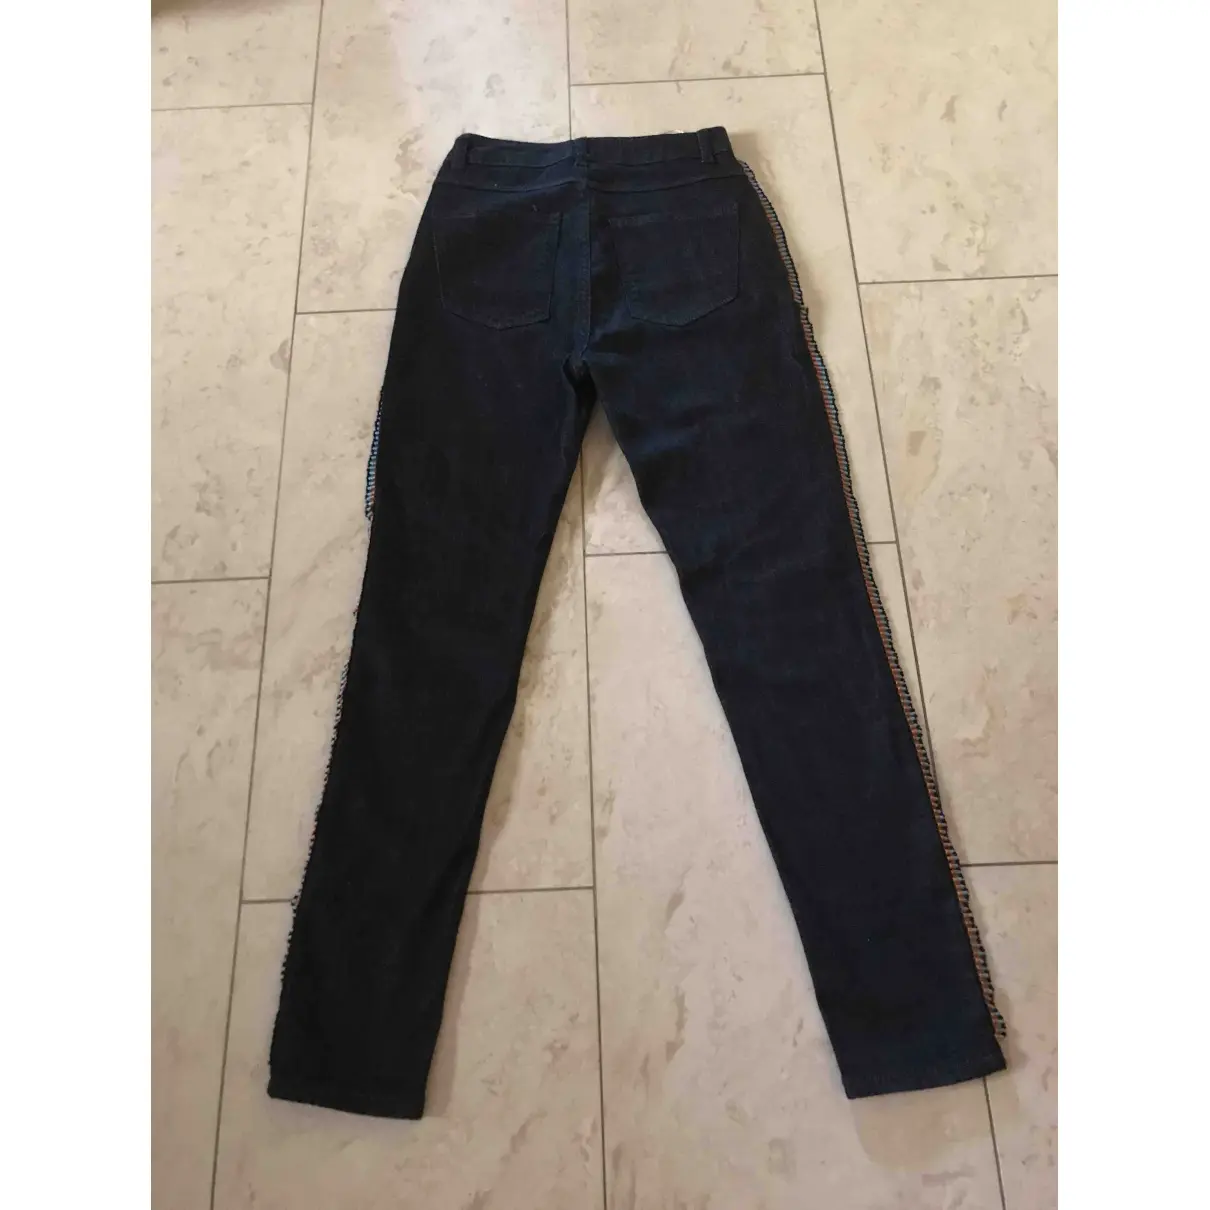 Buy Uterque Slim jeans online